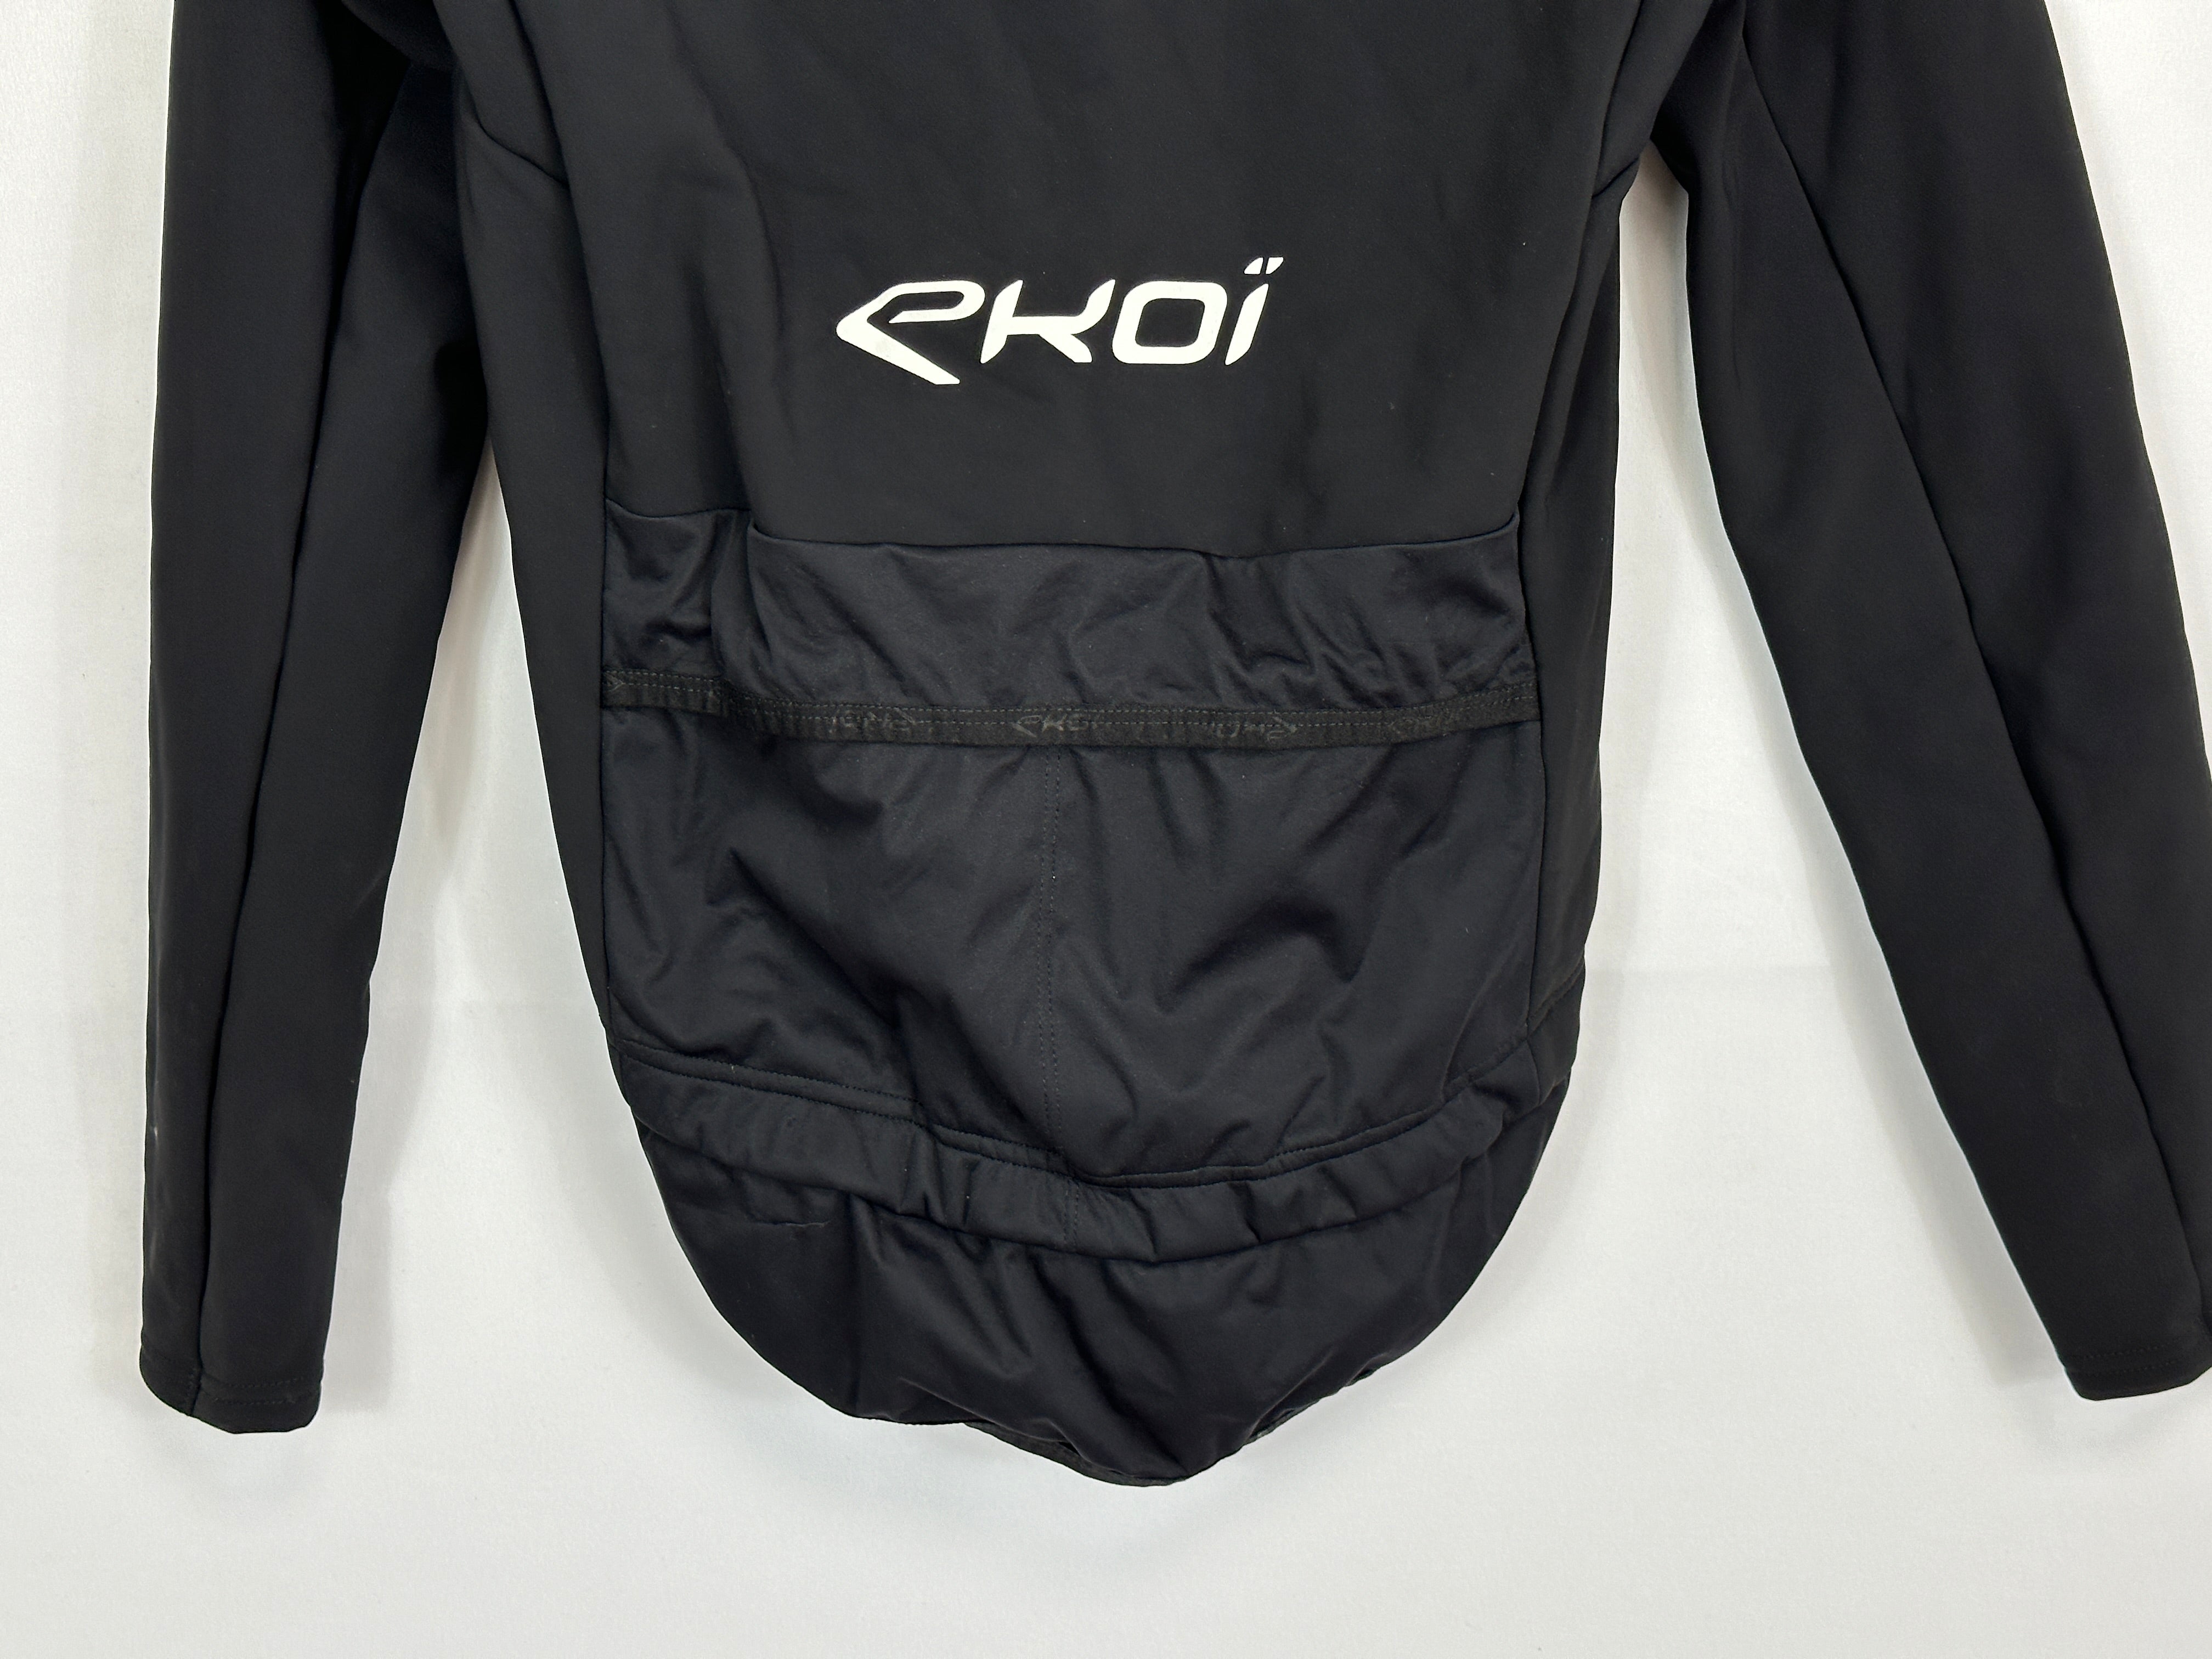 Team Israel Premier Tech - L/S Softshell Thermal Jacket by Ekoi